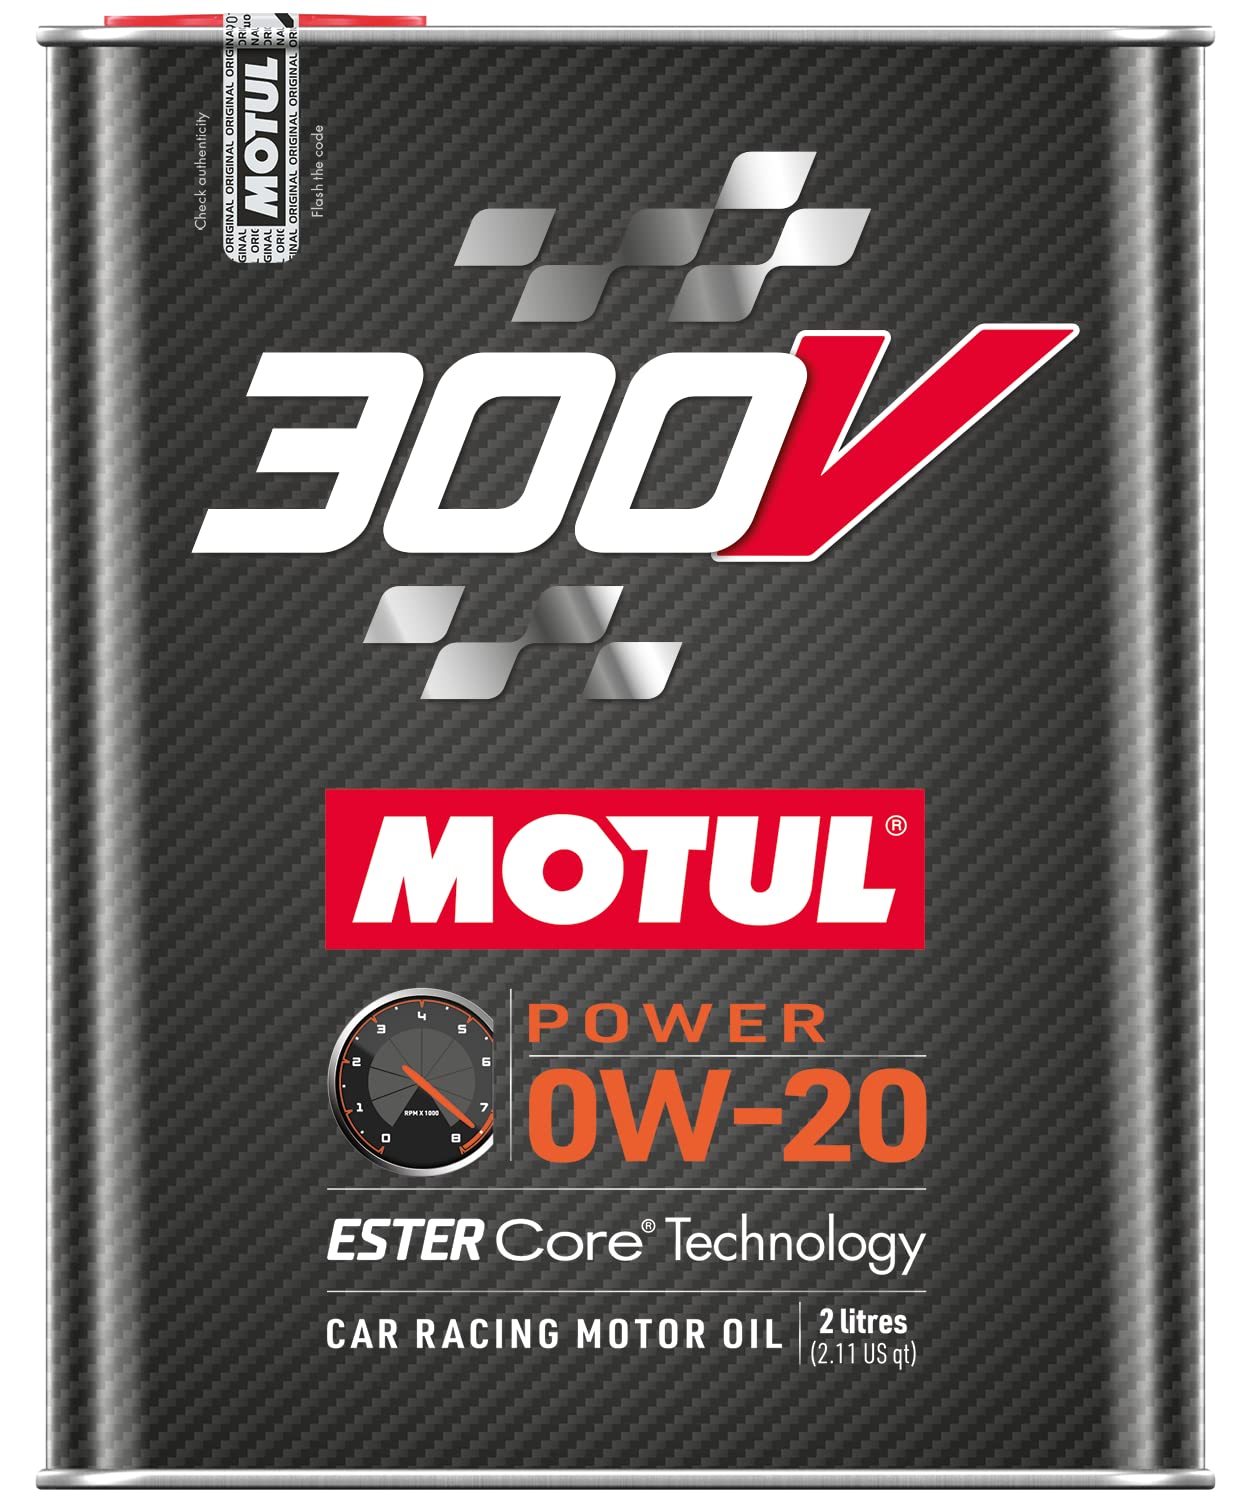 Motul 300V Power 0W20 Ester Core Technology Motoröl 2Liter von Motul